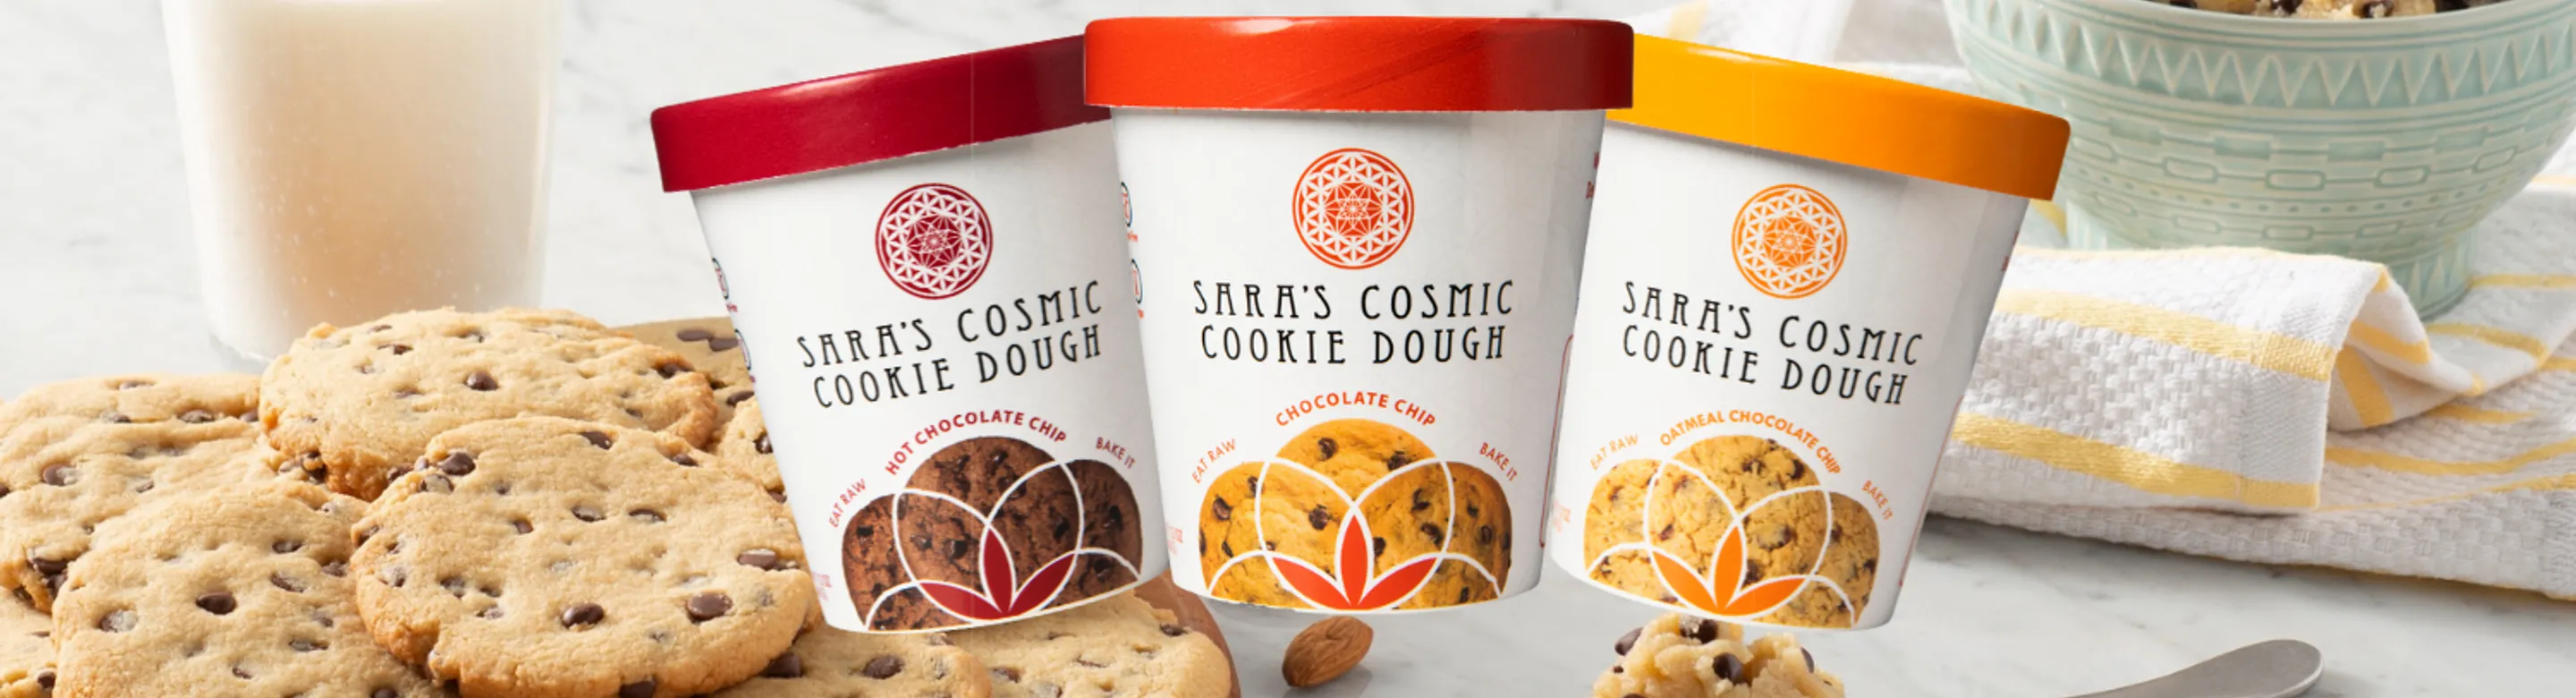 Sara's Cosmic Cookie Dough